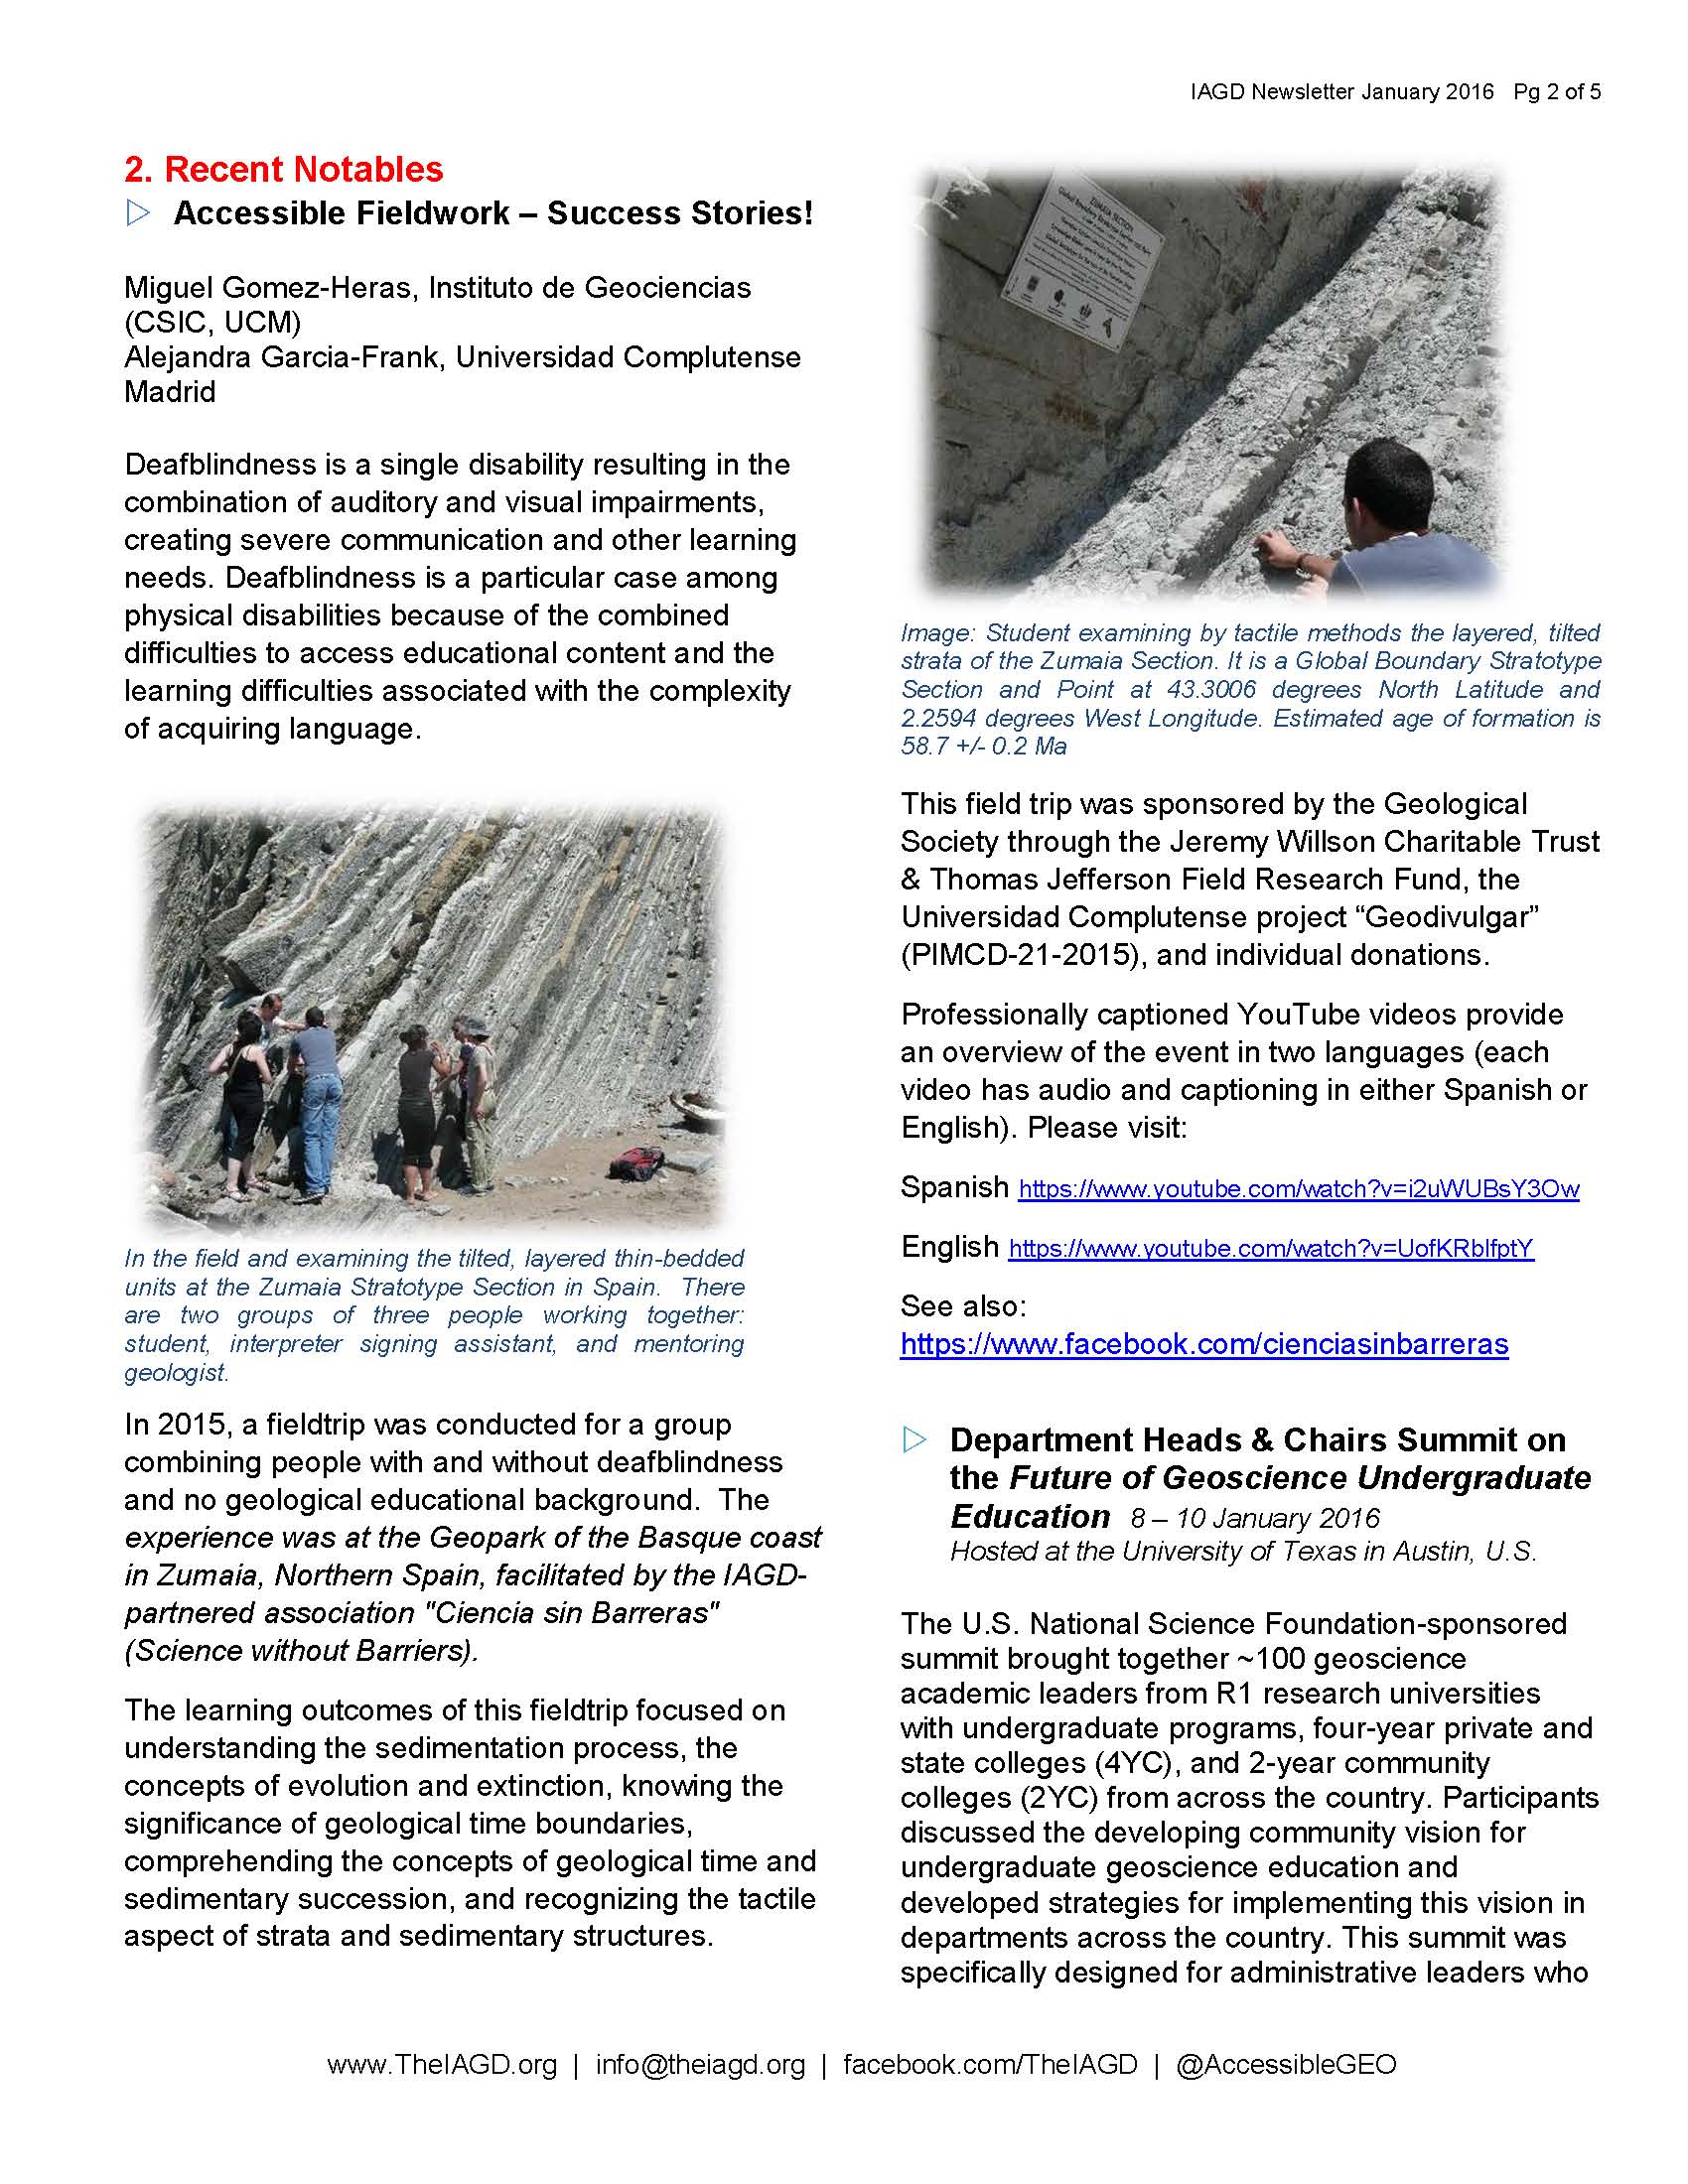 Geodivulgar y Ciencia sin Barreras en el Newsletter de la International Association of Geoscience Diversity